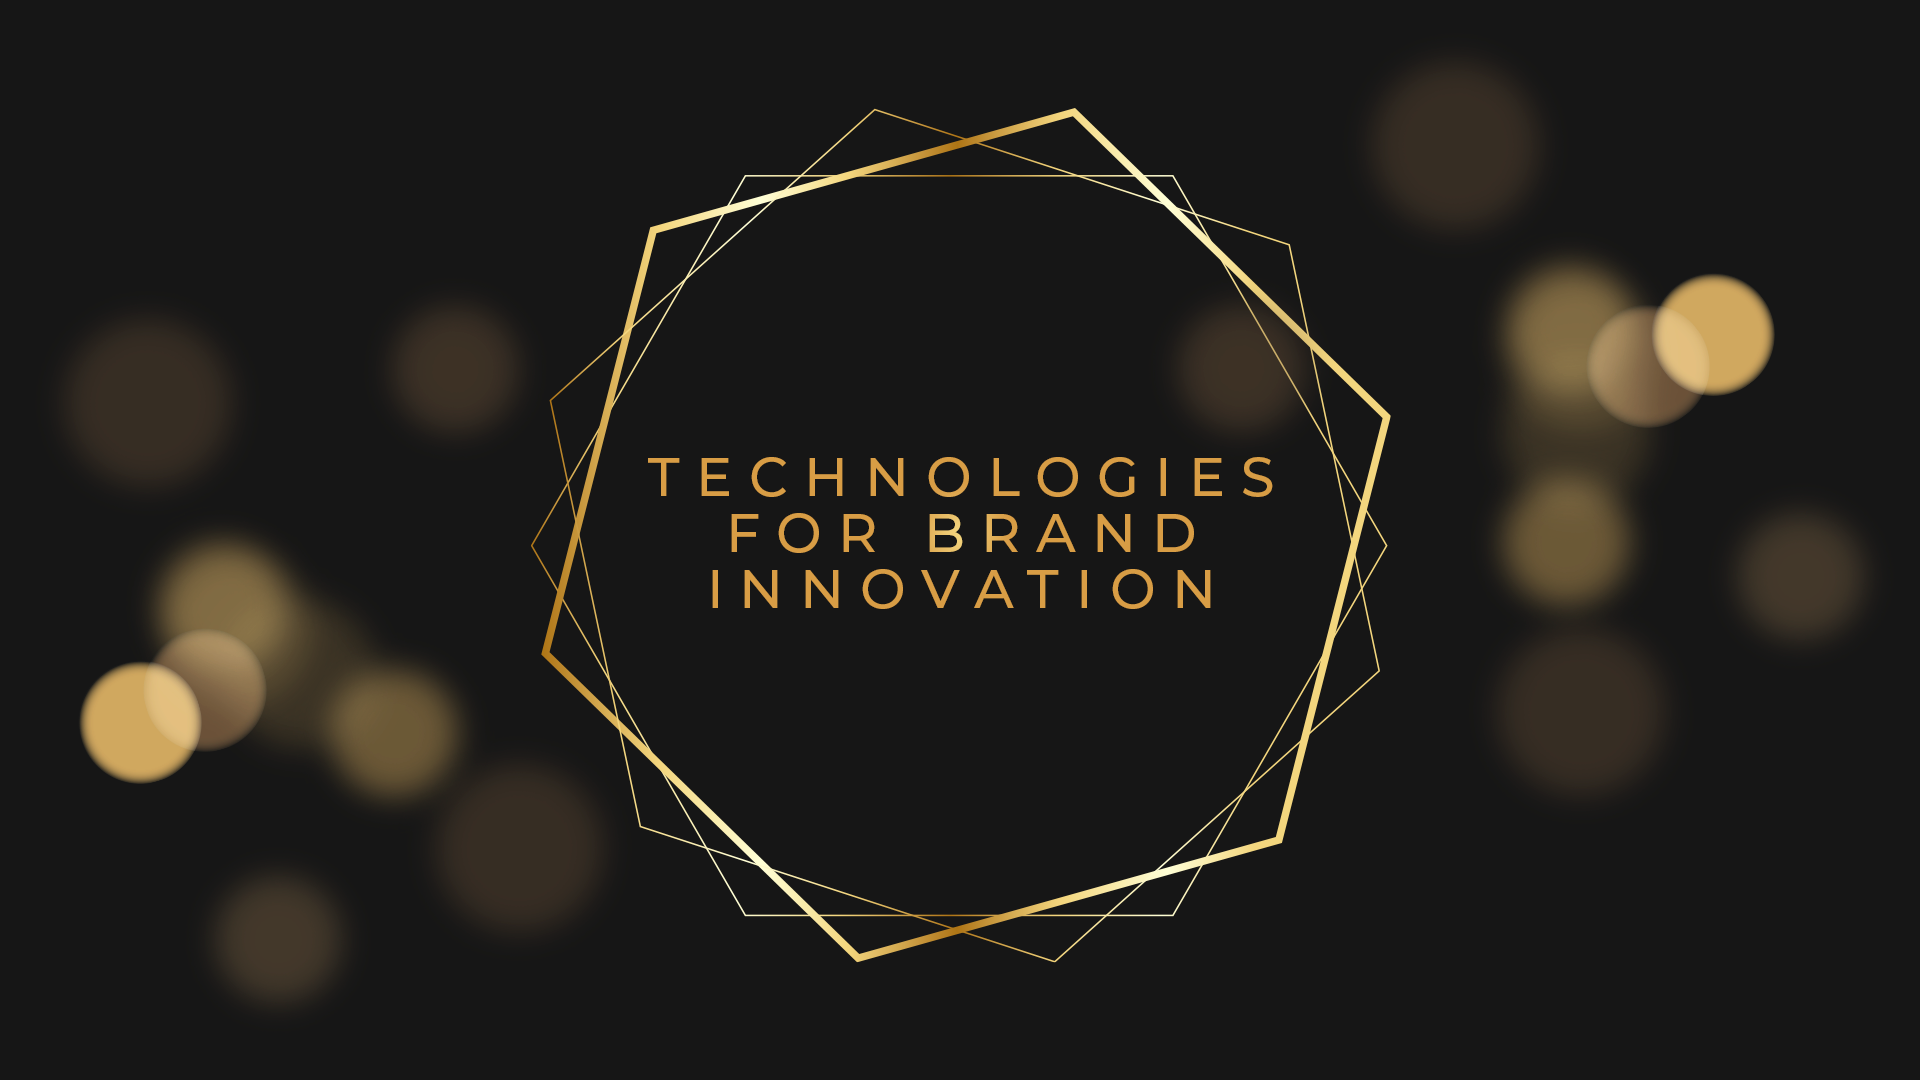 Technologies for Brand Innovation